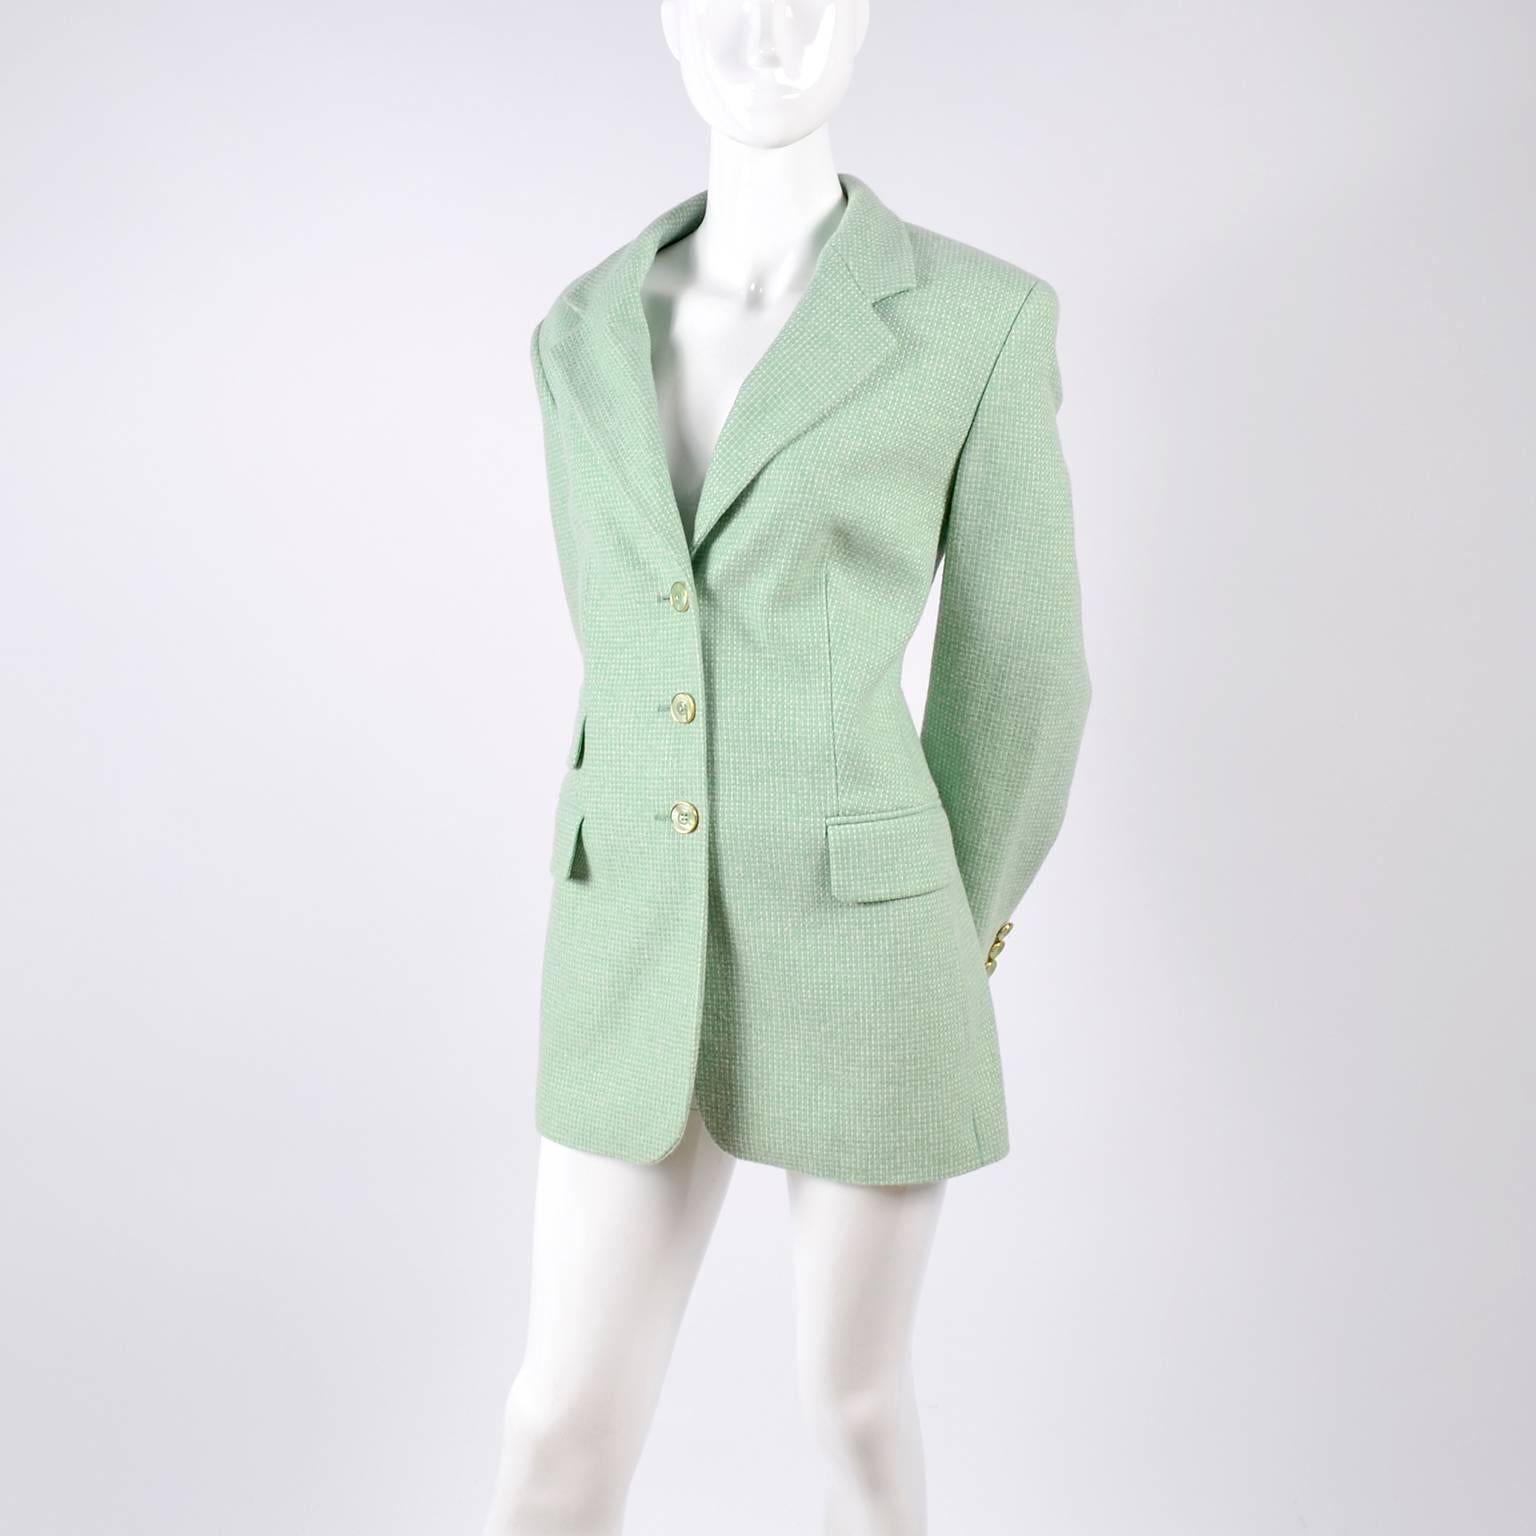 Escada Margaretha Ley Green Cashmere Blazer Jacket in Size 8 For Sale 4